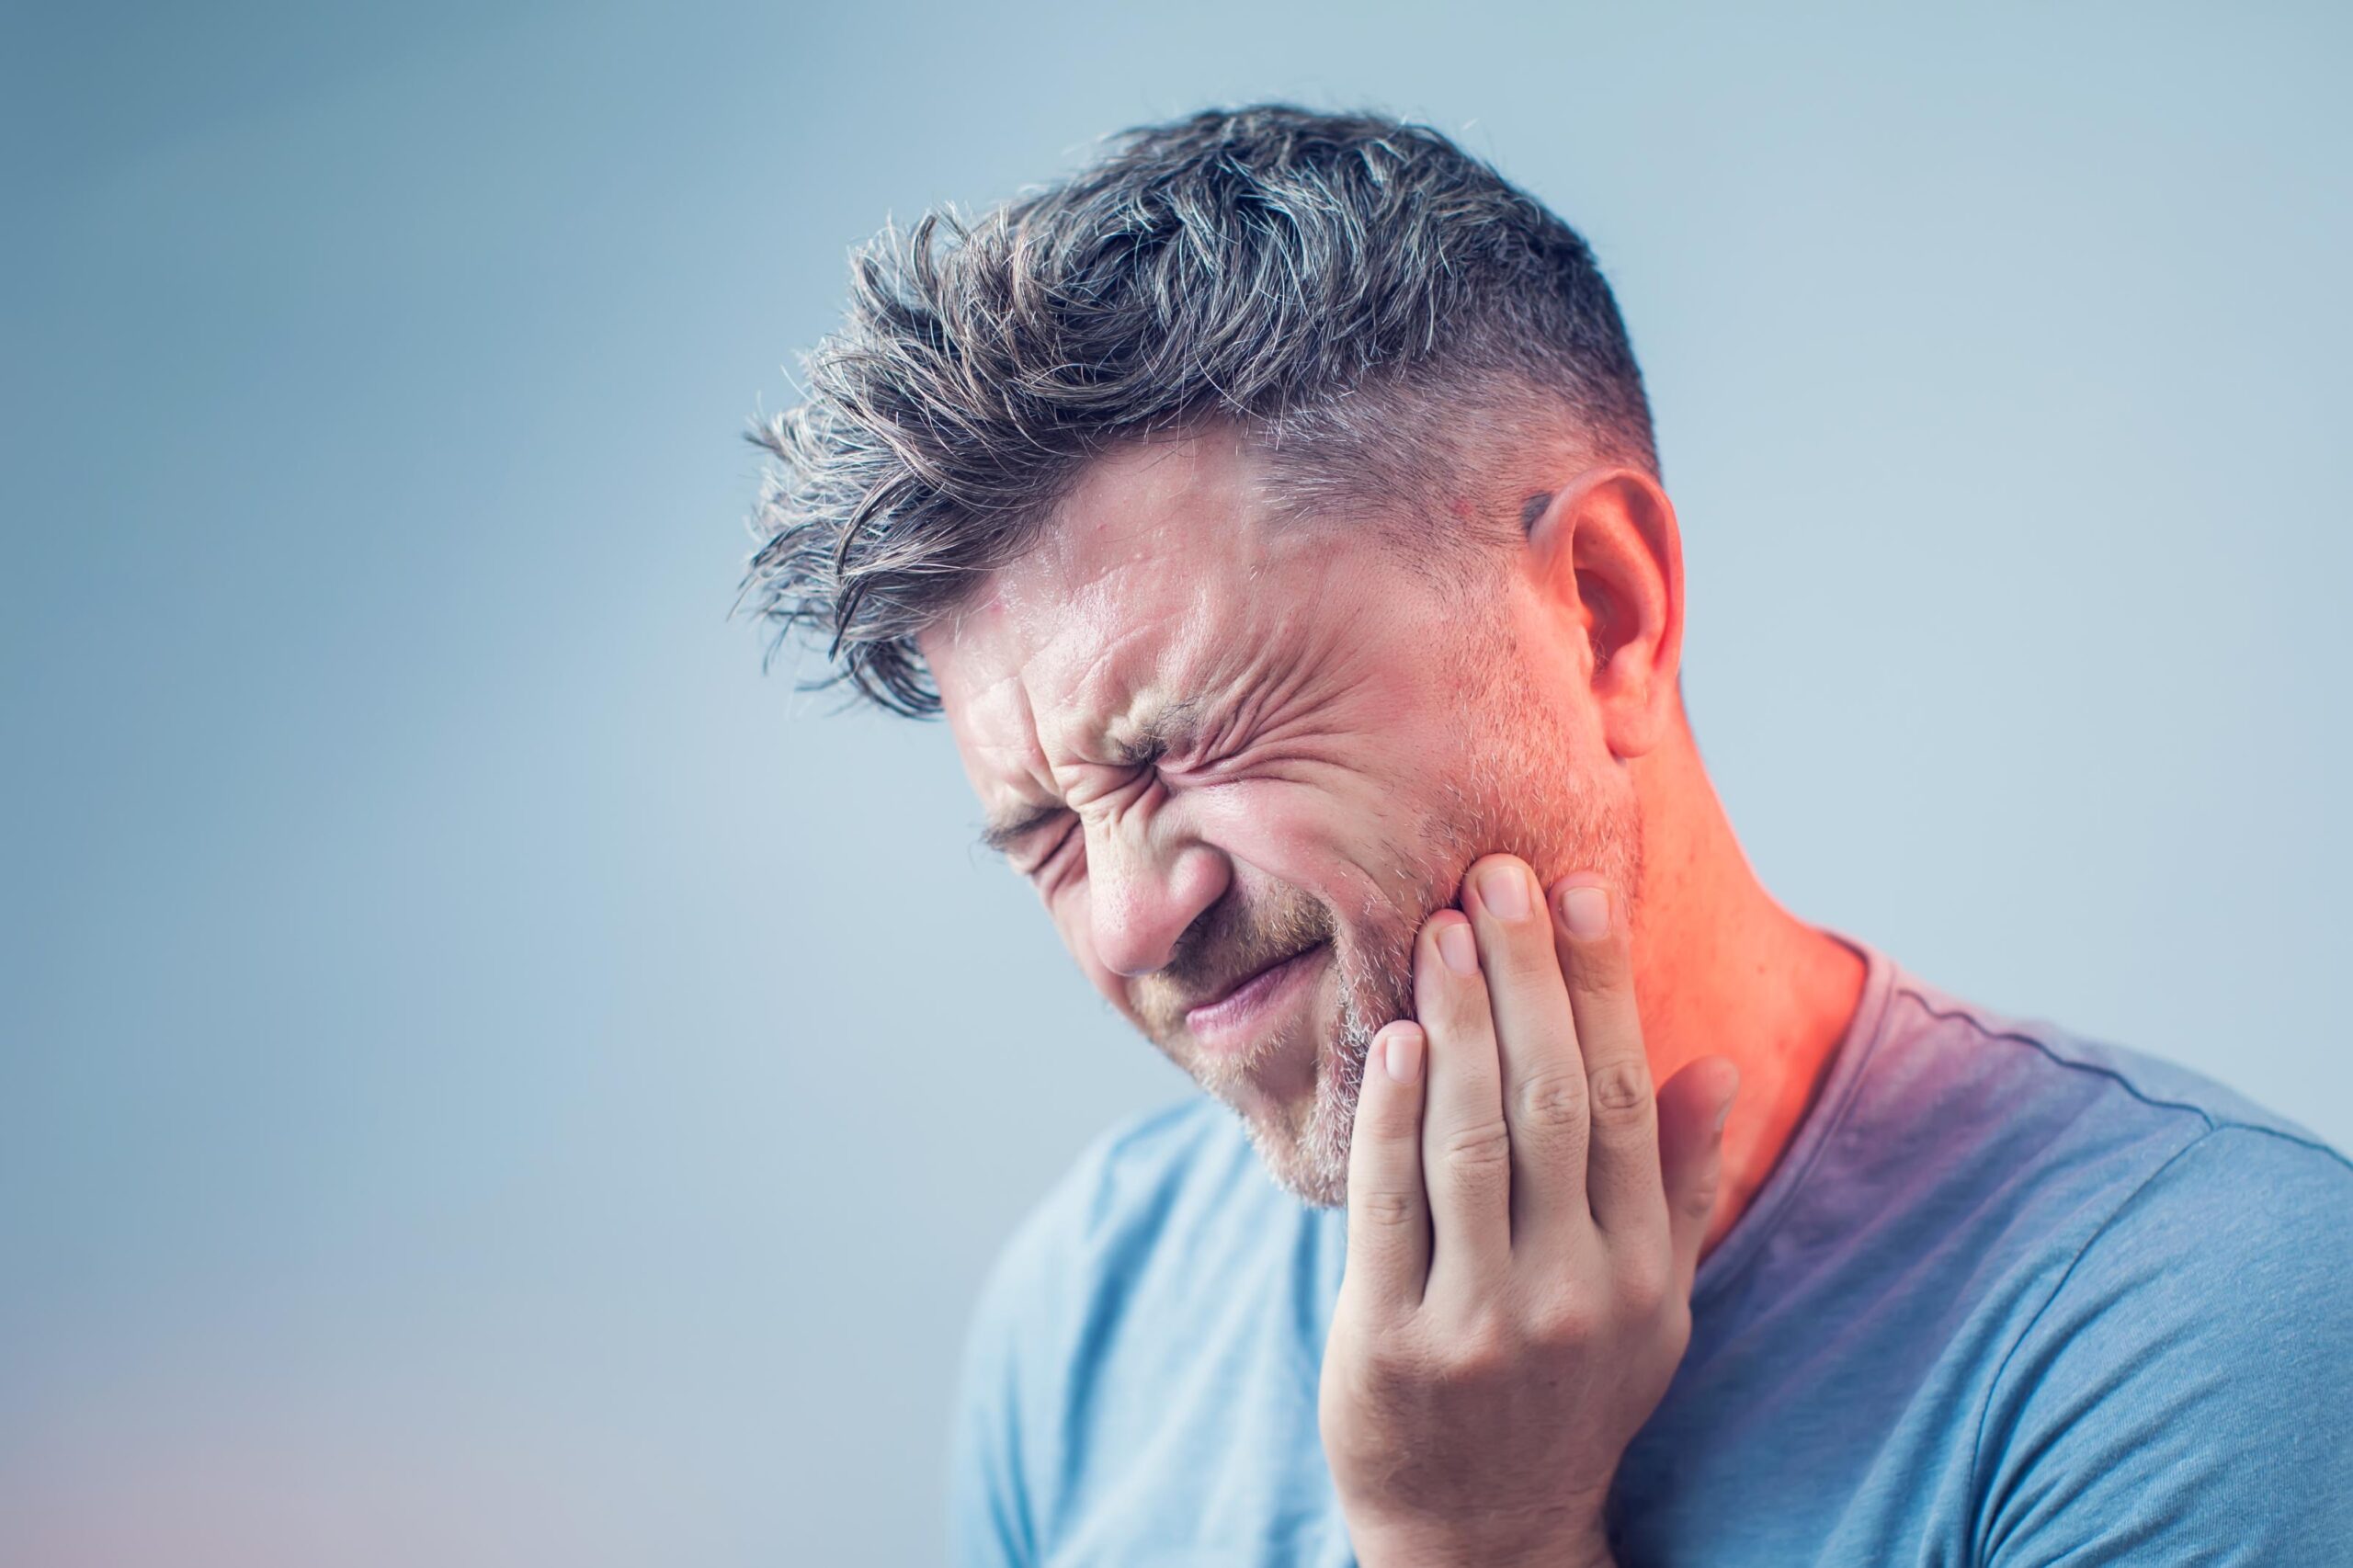 Understanding What’s Behind Your Toothache